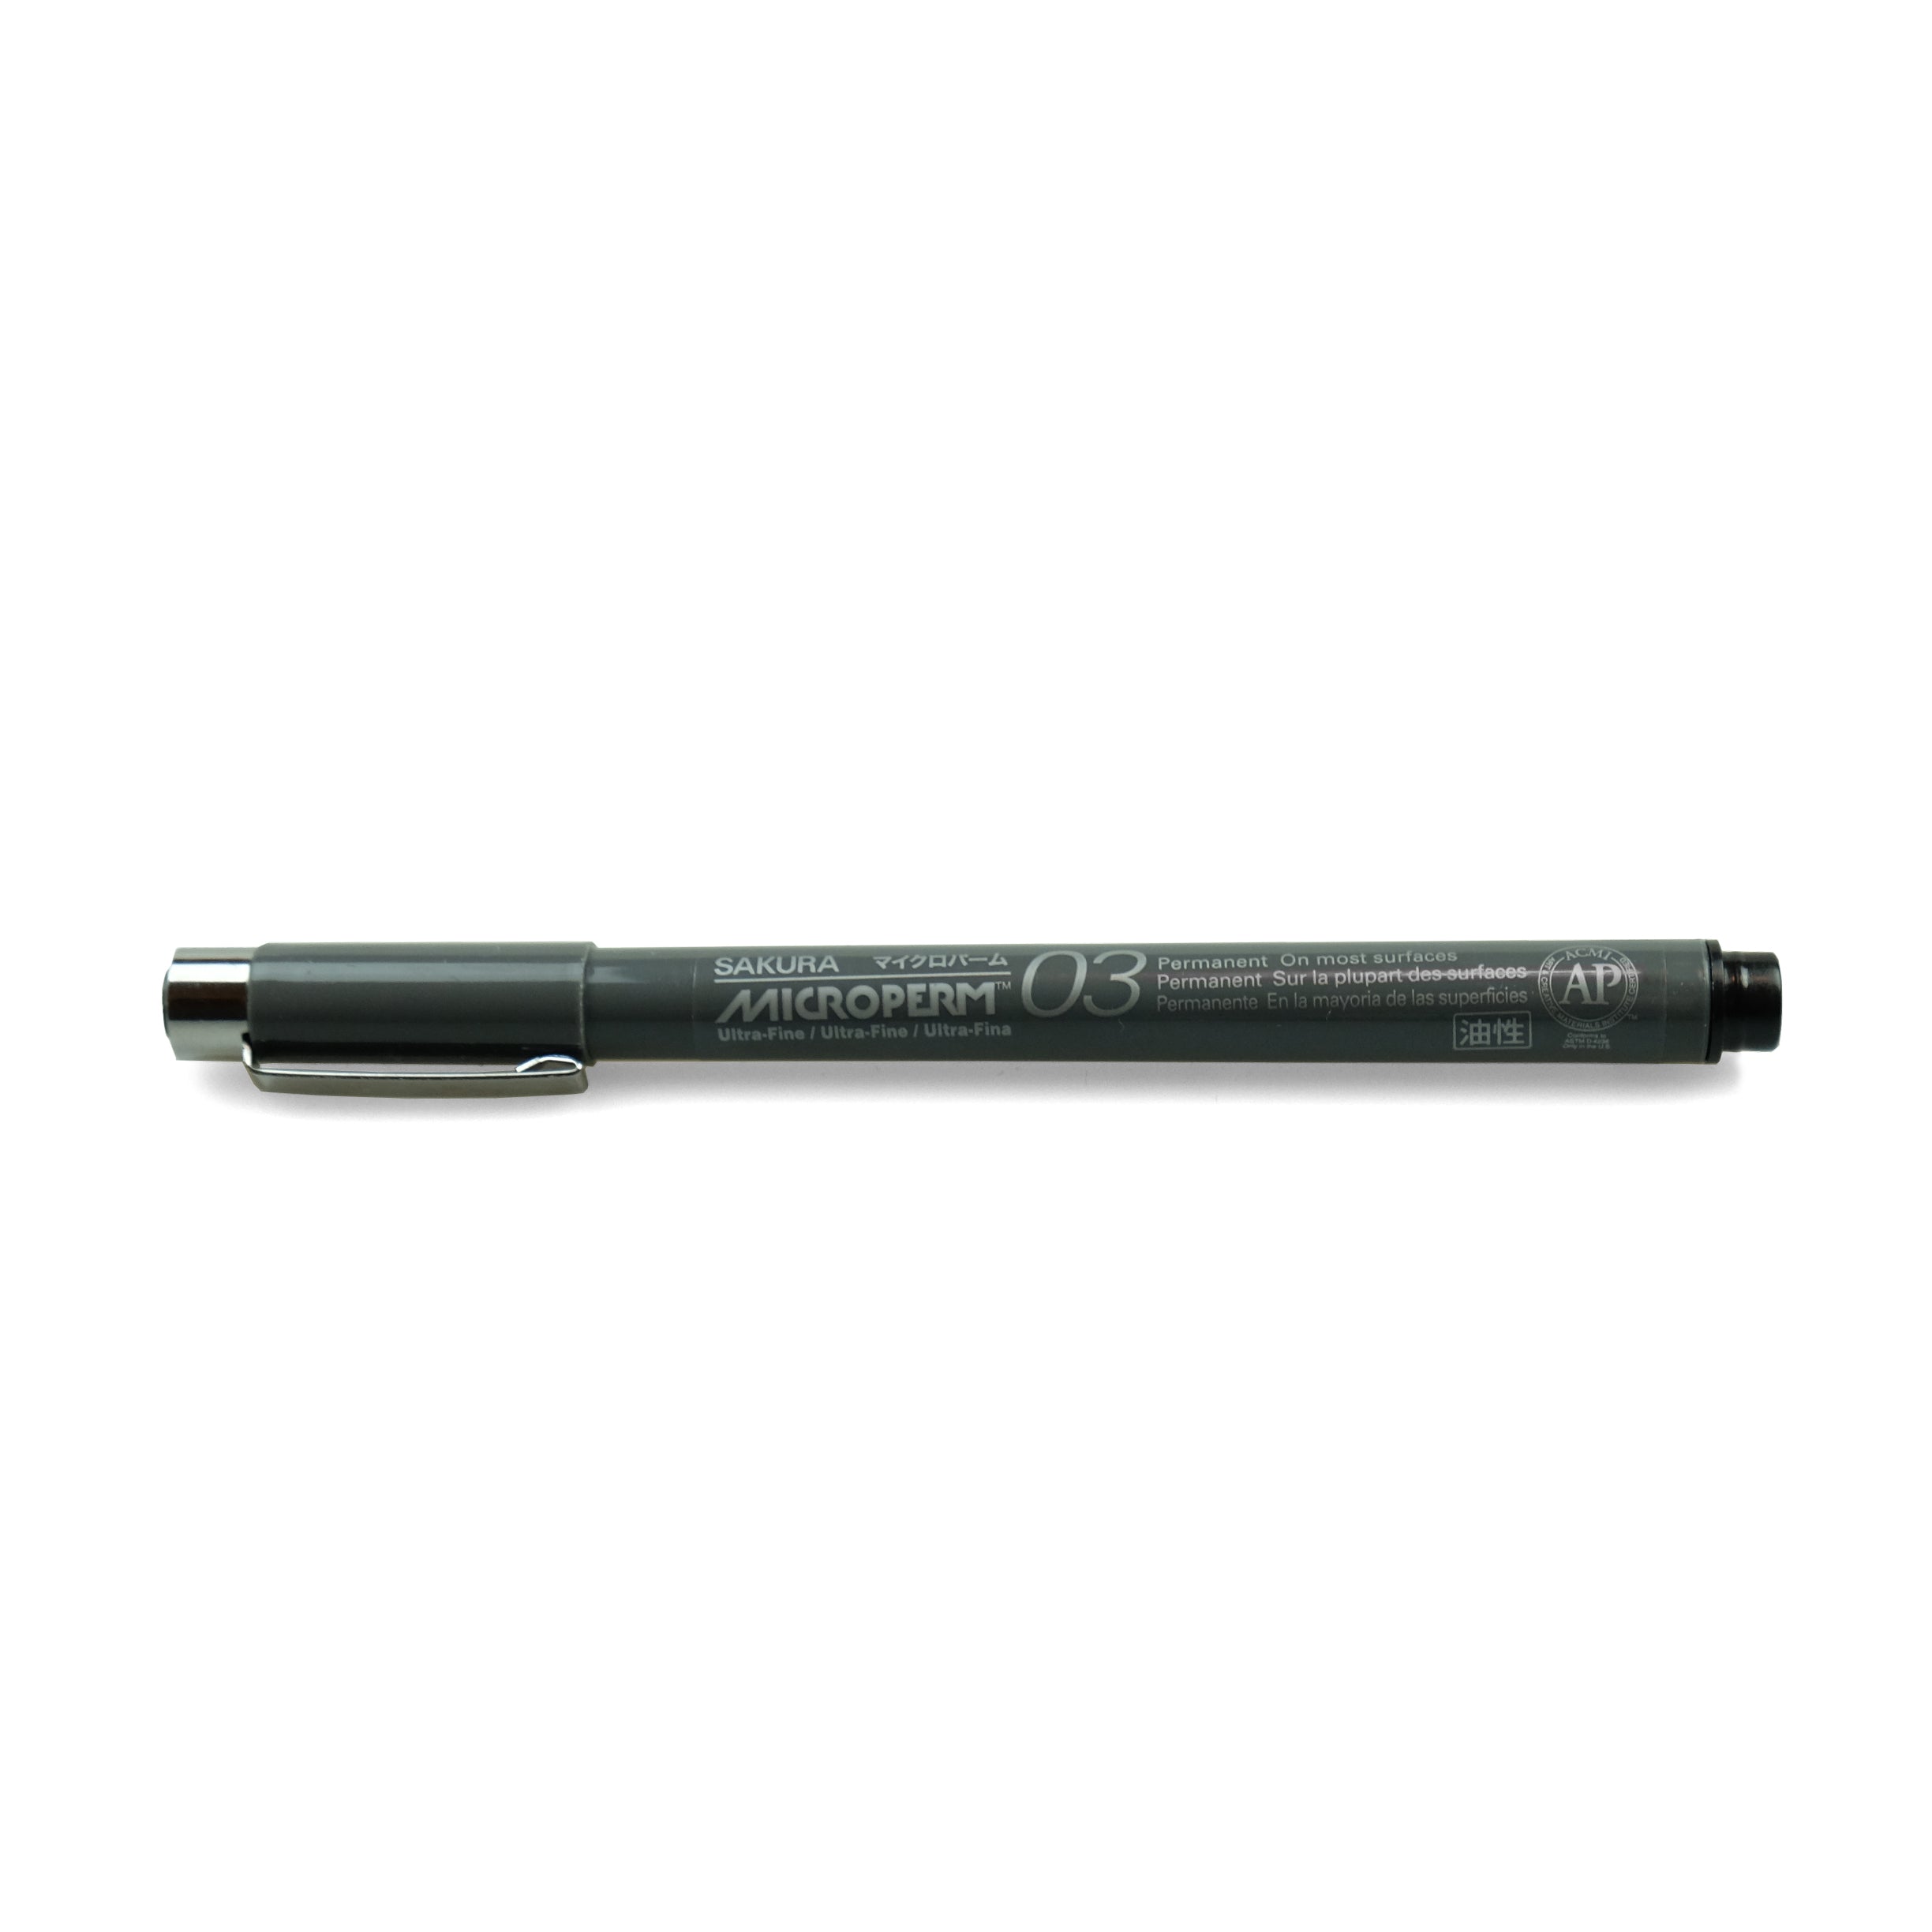 Sakura Microperm Pen - ArtSnacks